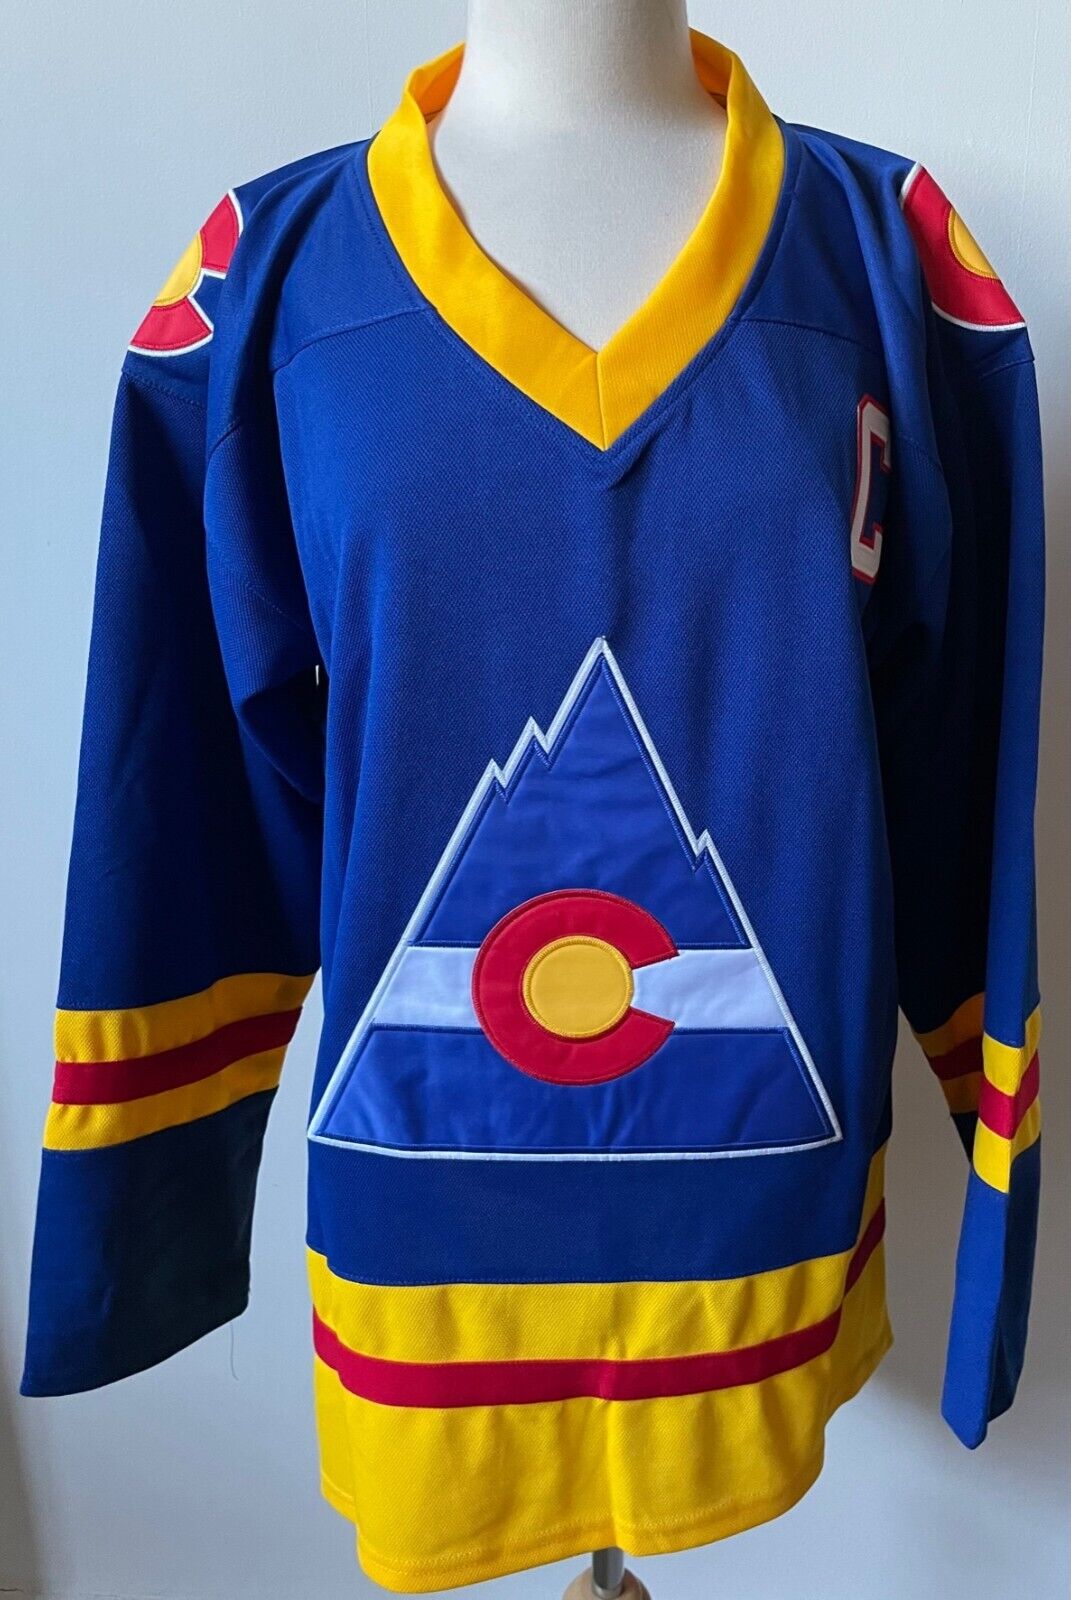 Lanny McDonald Autographed Colorado Rockies Jersey JSA COA Signed NHL –  Glory Days Sports